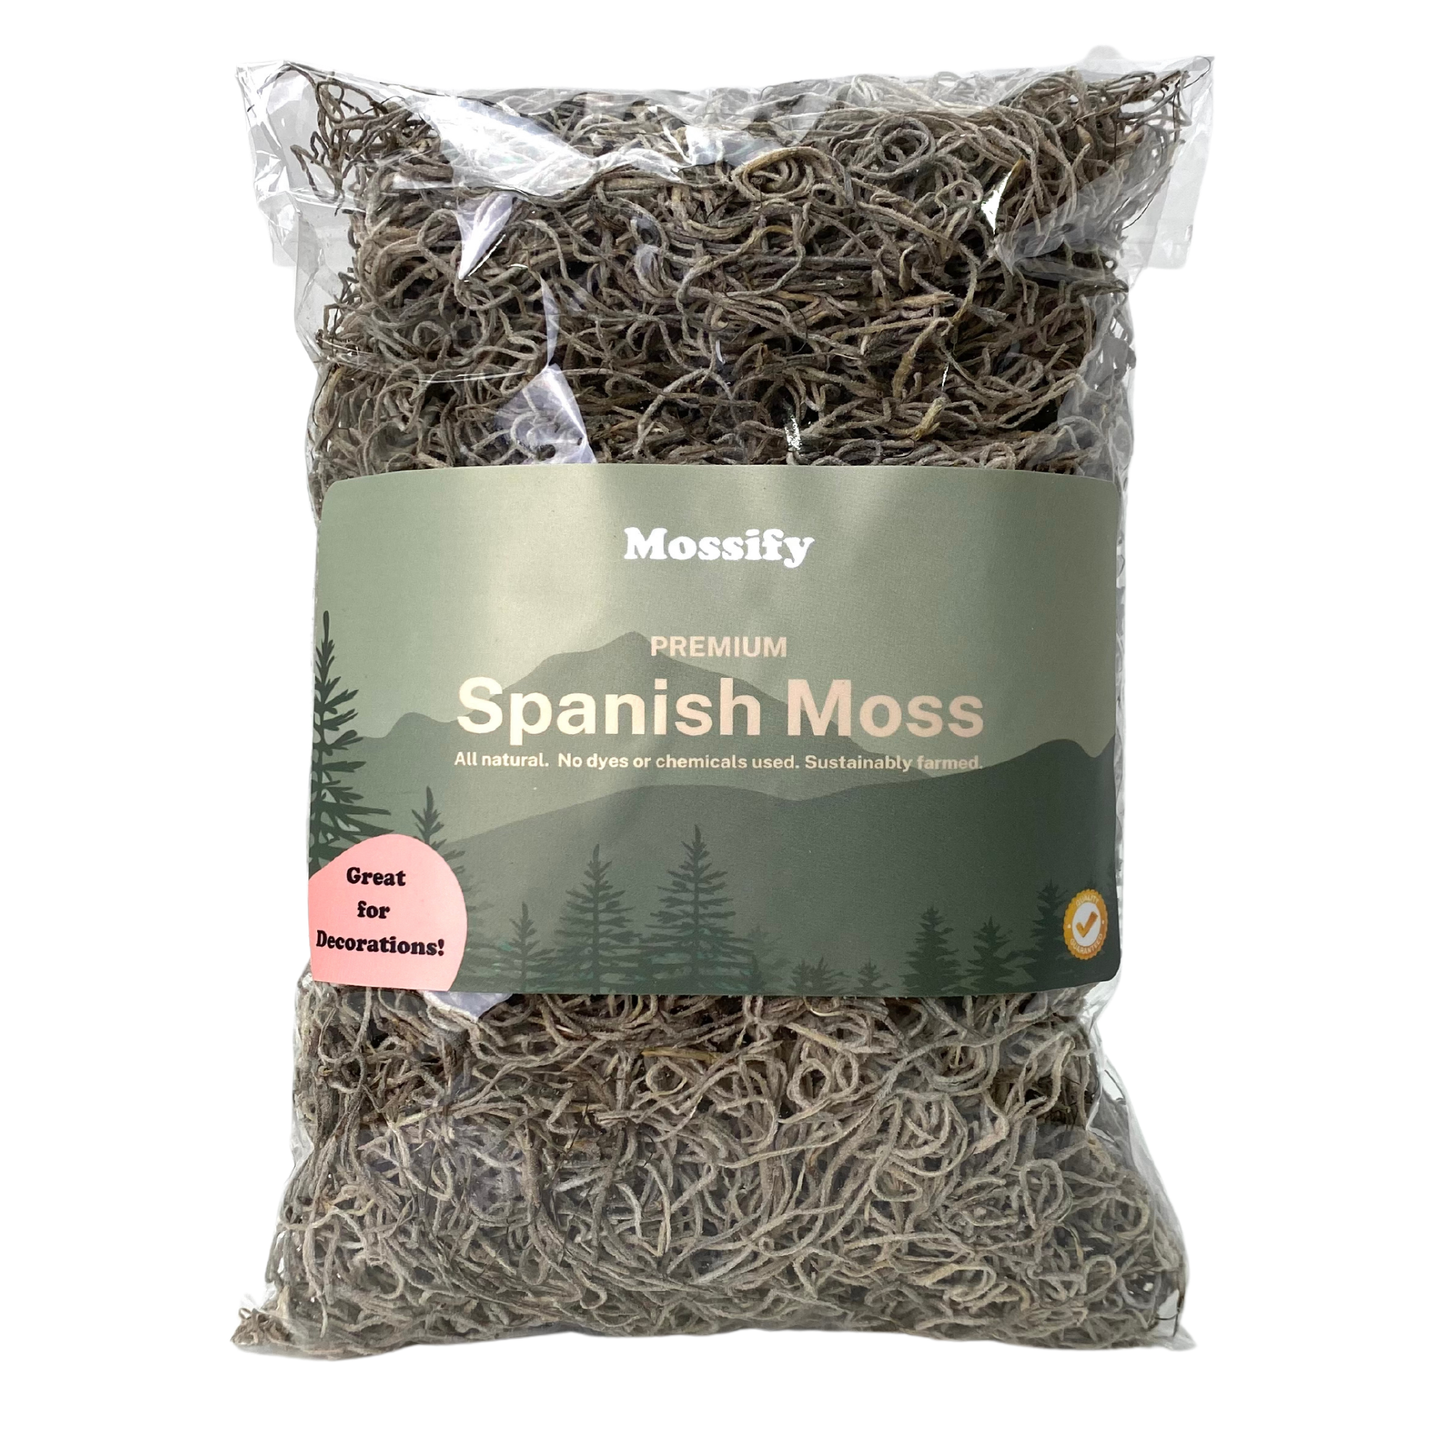 Premium Spanish Moss Mix - Naturally & Sustainably Harvested